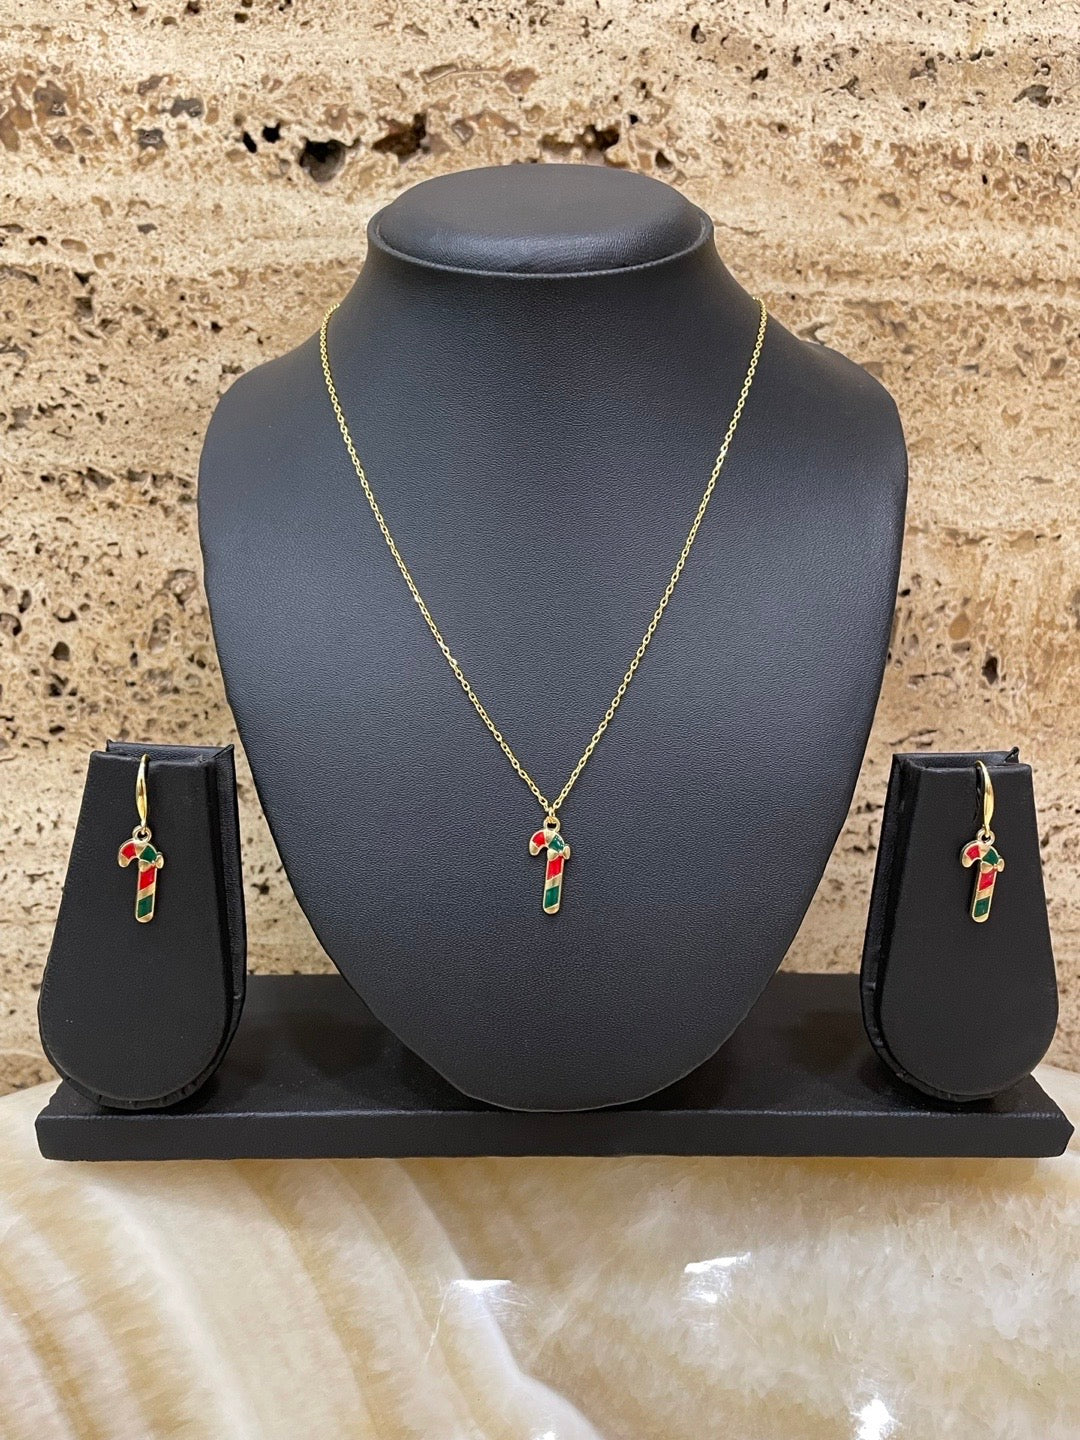 Telosmadz HCZL Limited Sweetheart Festivity Heart & Candy Cane Necklace  Necklaces, Pendants, Jewelry, Jewelry From Daizi01, $55.28 | DHgate.Com